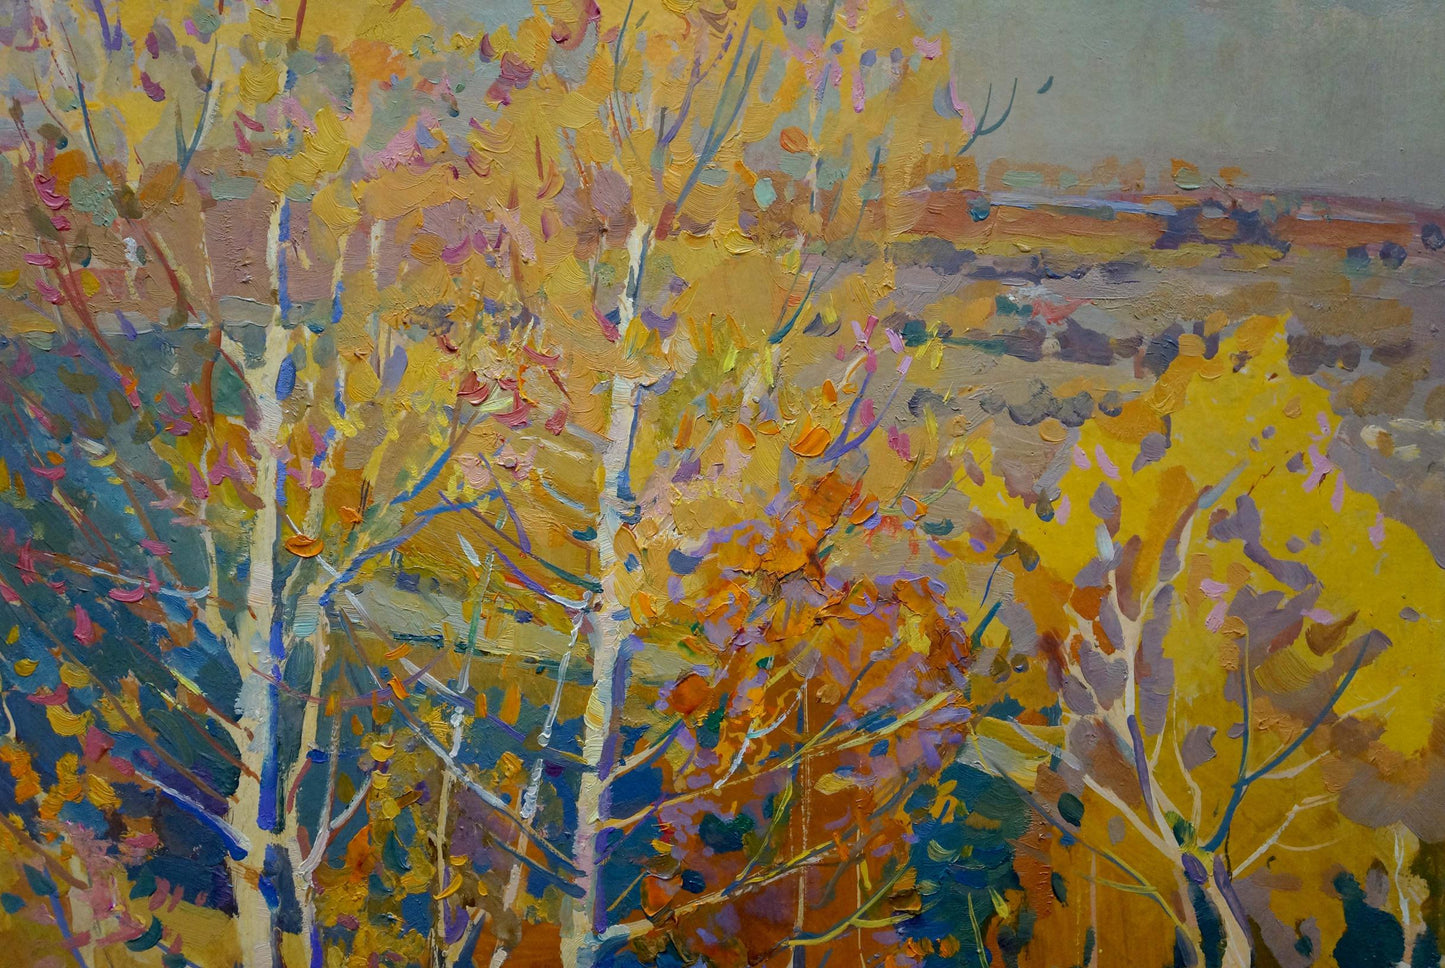 In this painting, Kolesnik illustrates the charm of autumn